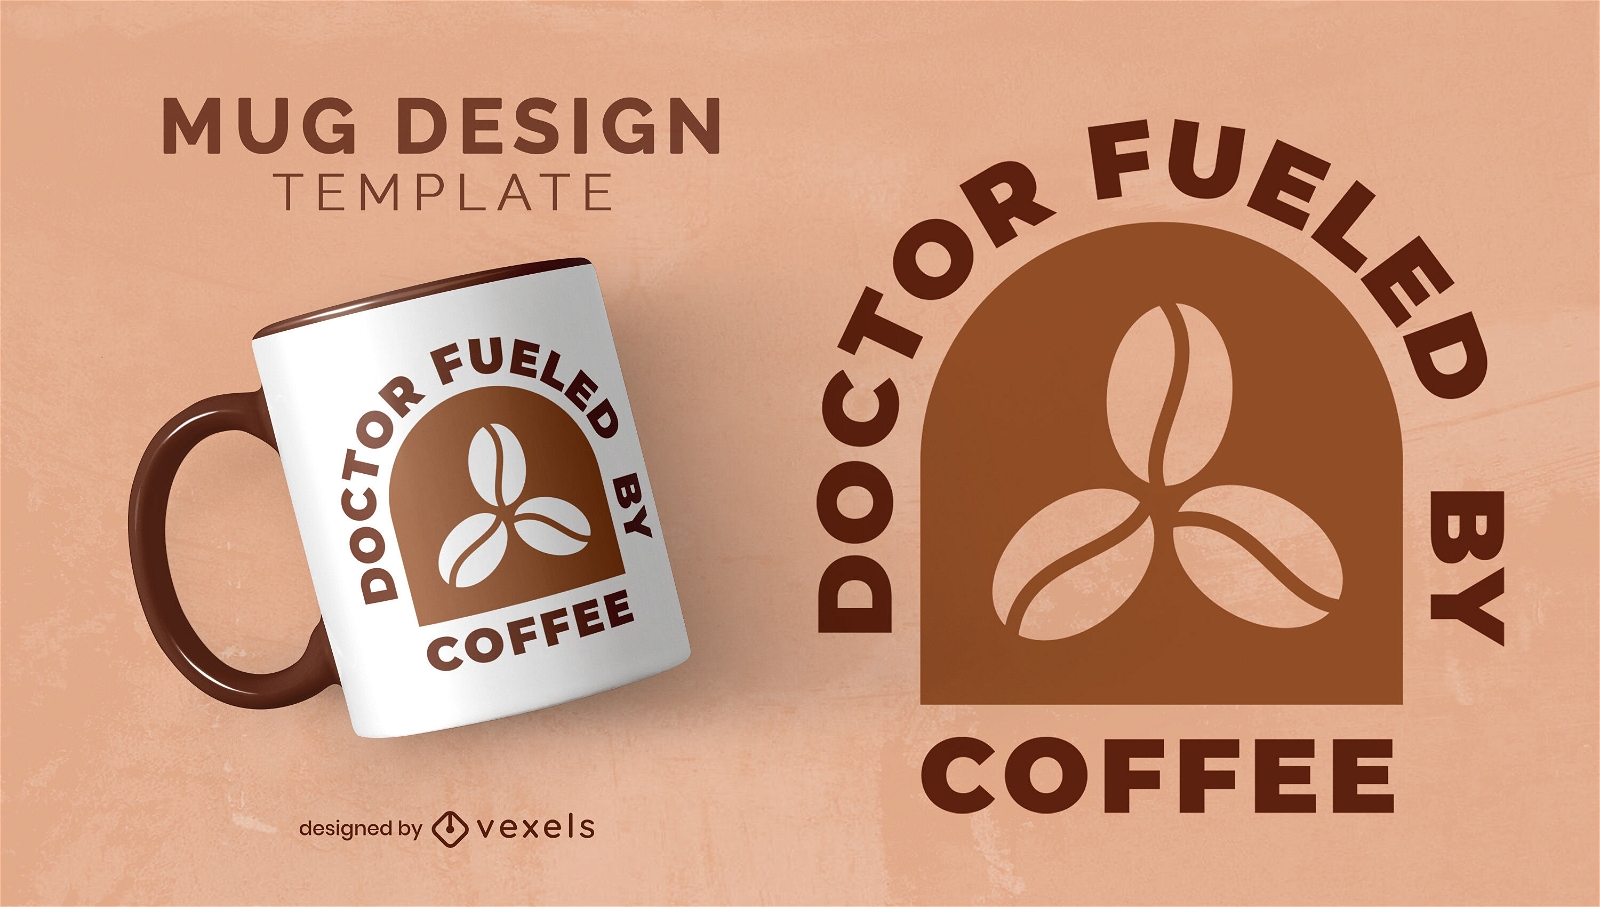 Doctor fueled by coffee mug design